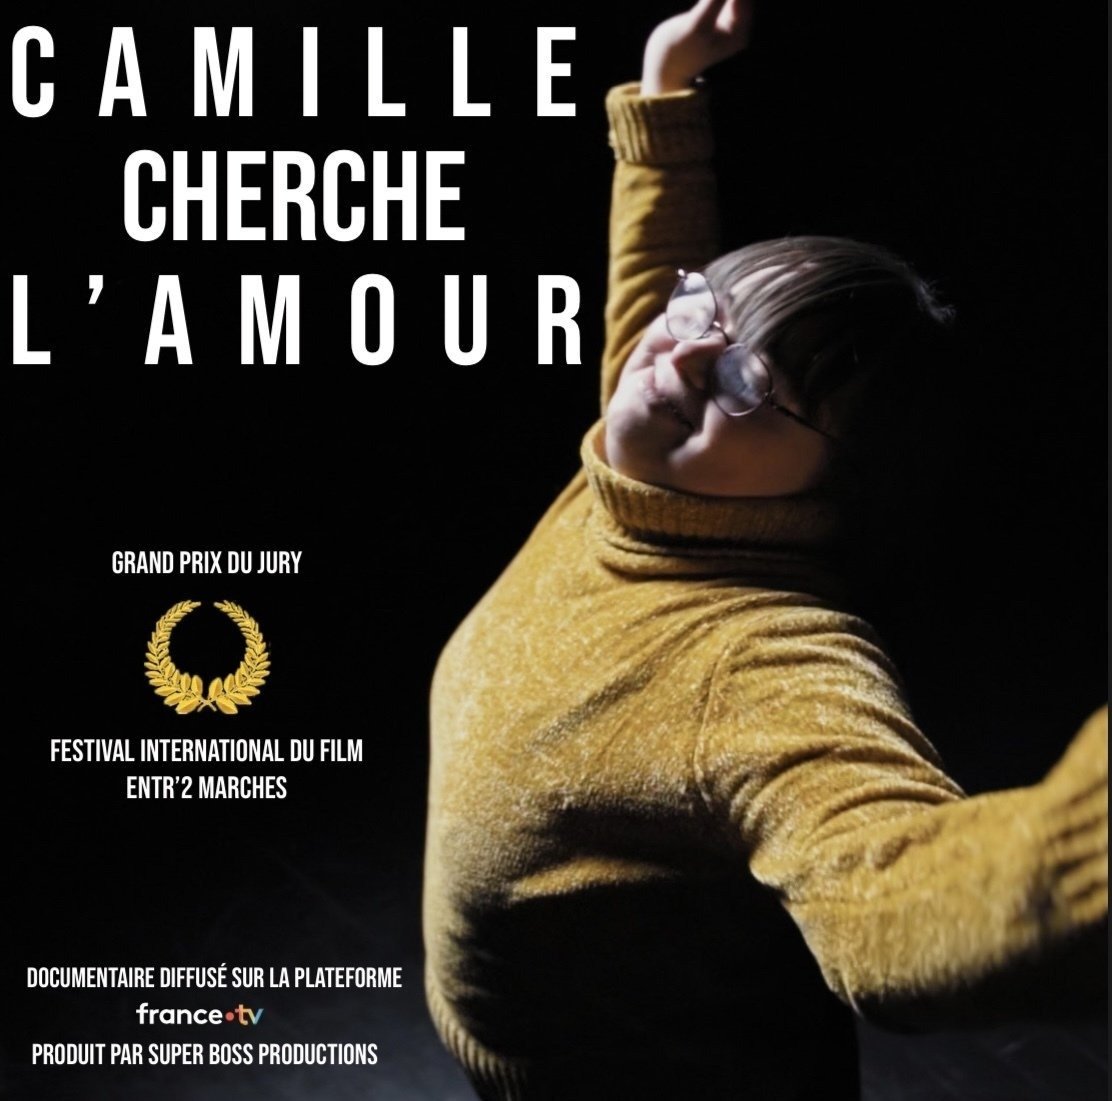 Camille cherche l'amour : Grand prix du jury